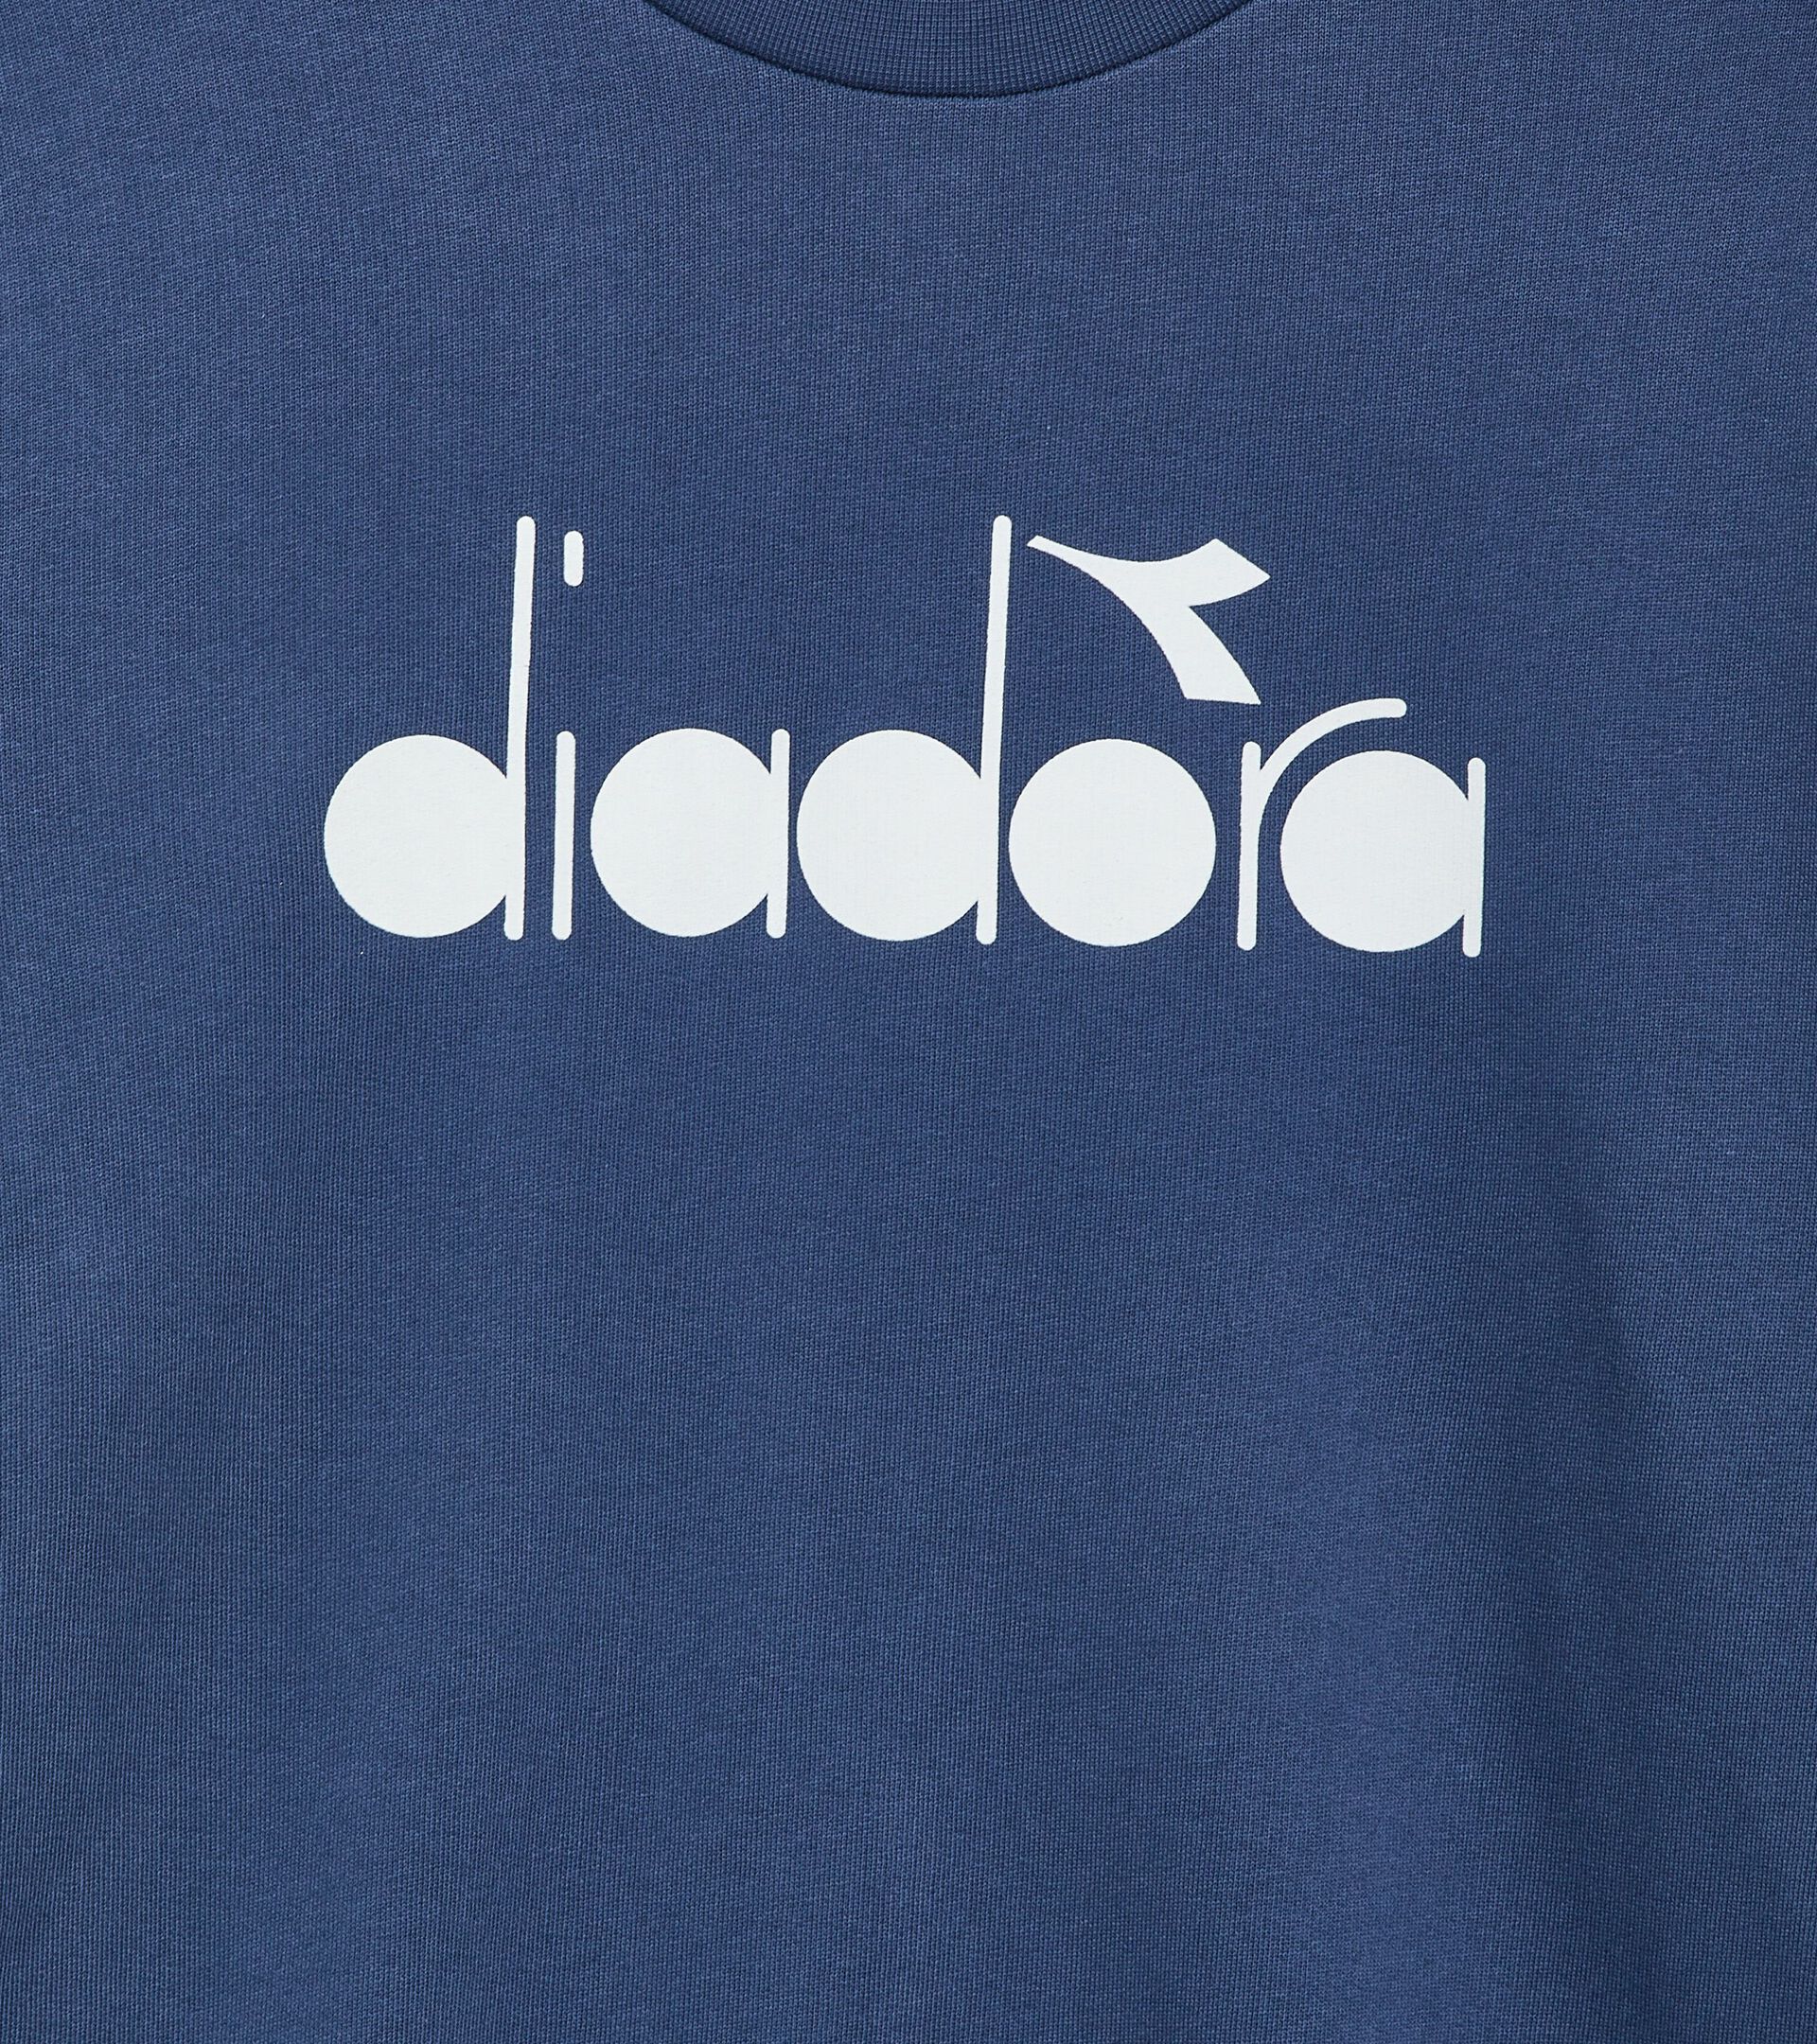 Sweatshirt - Made in Italy - Gender Neutral SWEATSHIRT CREW LOGO OCEANA - Diadora